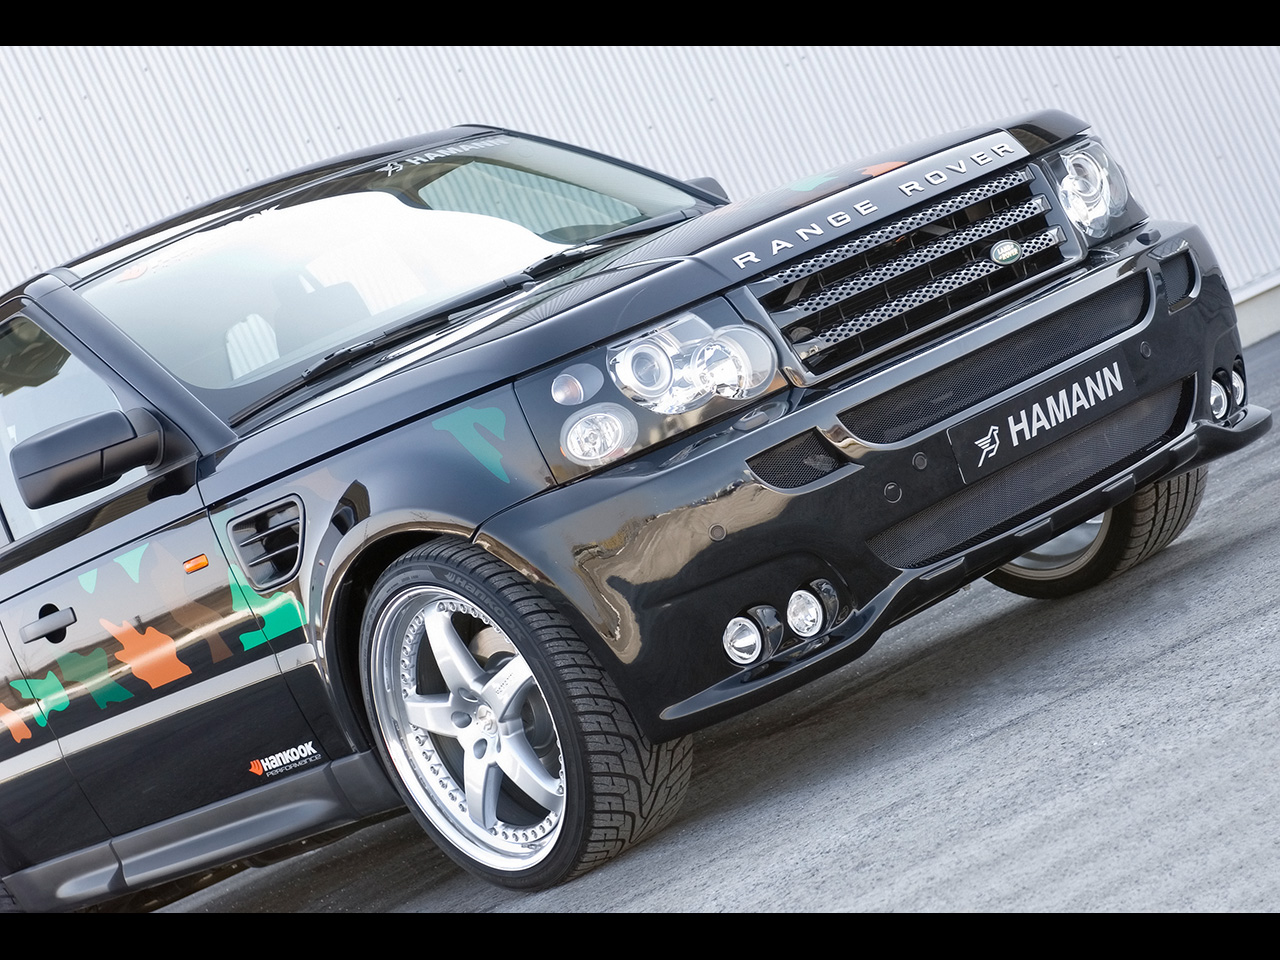 2006 Hamann Range Rover Sport